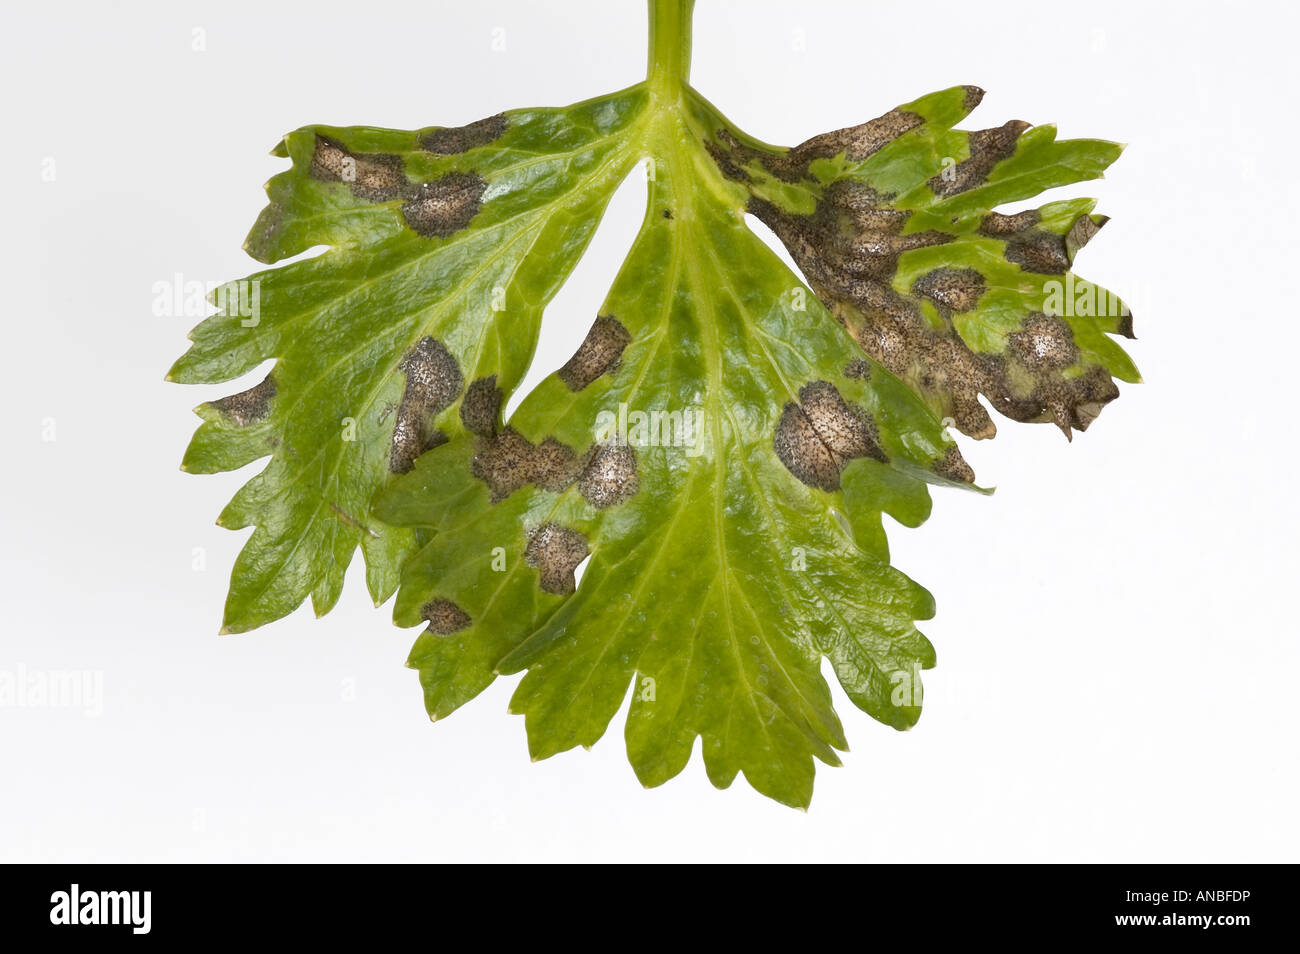 Septoria leaf spot su foglie di sedano Foto Stock